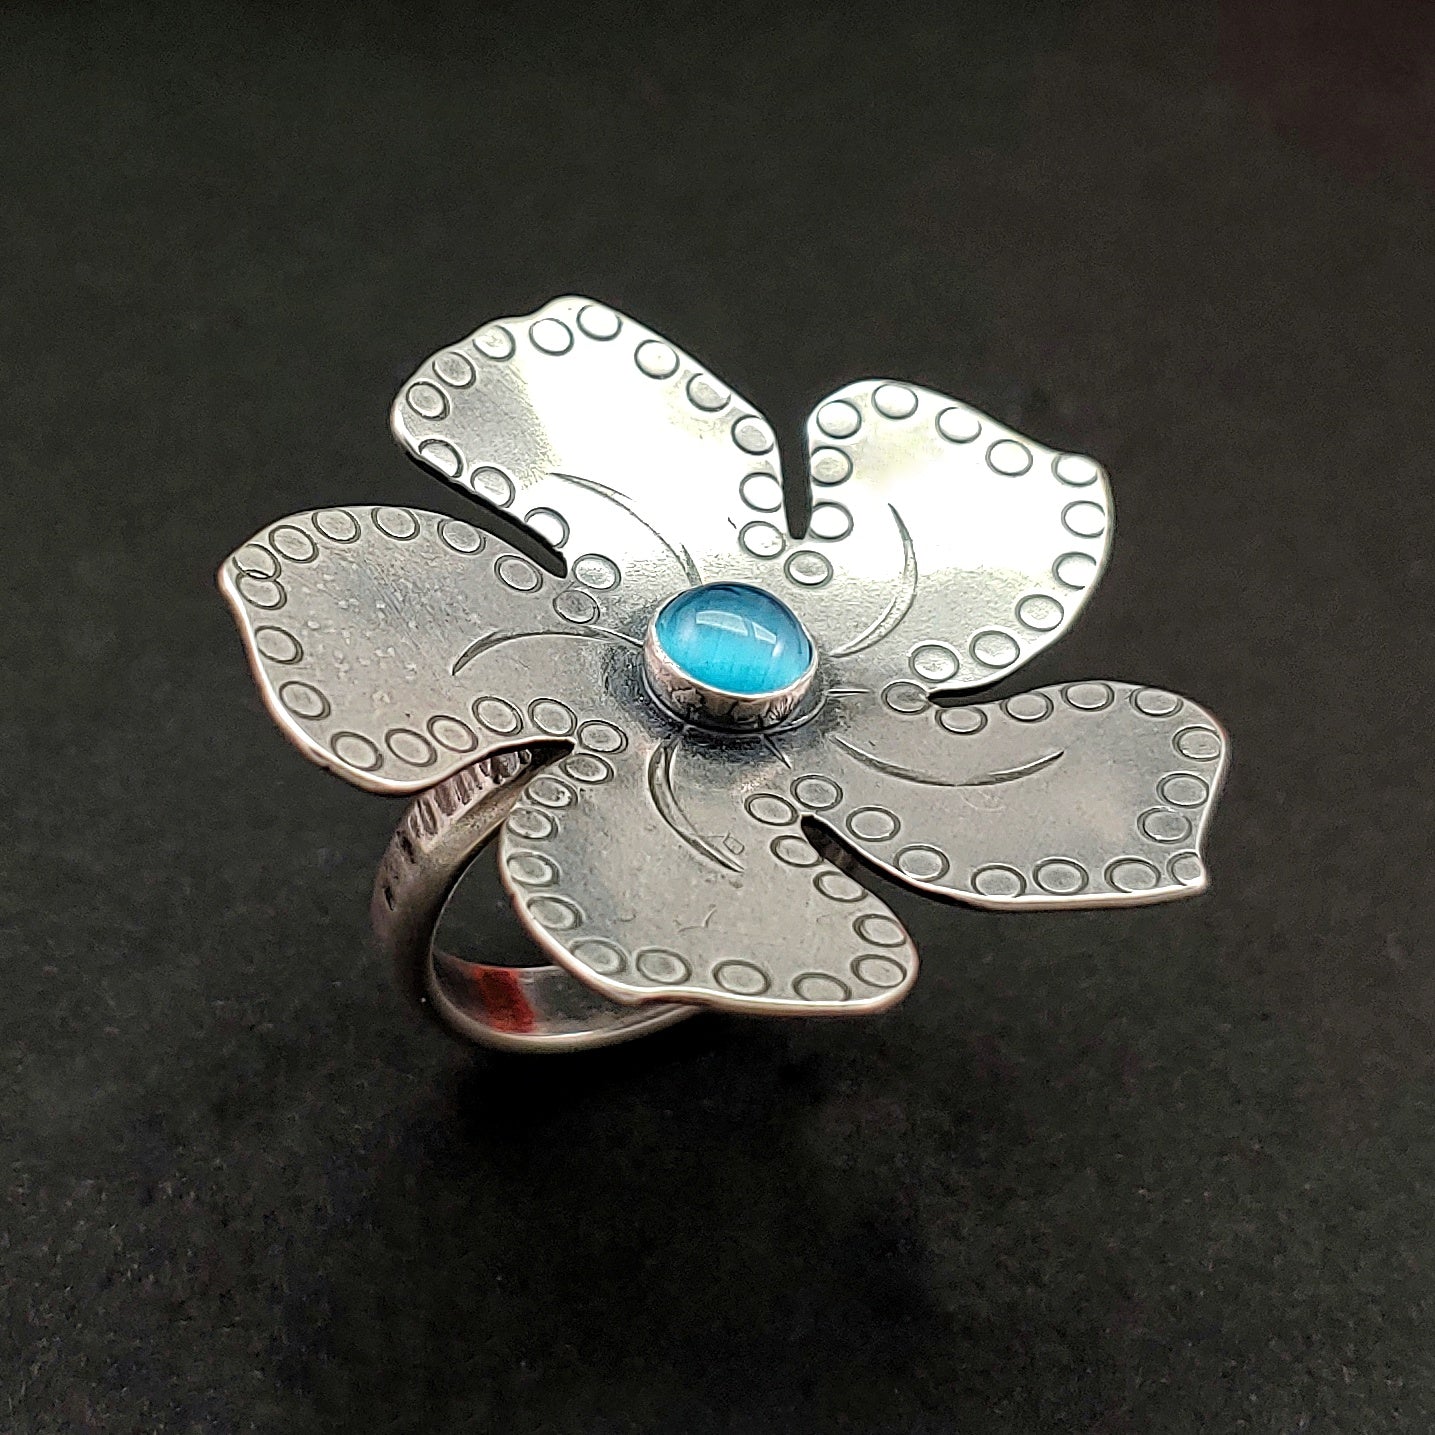 Large Handstamped Flower Ring with Gemstone